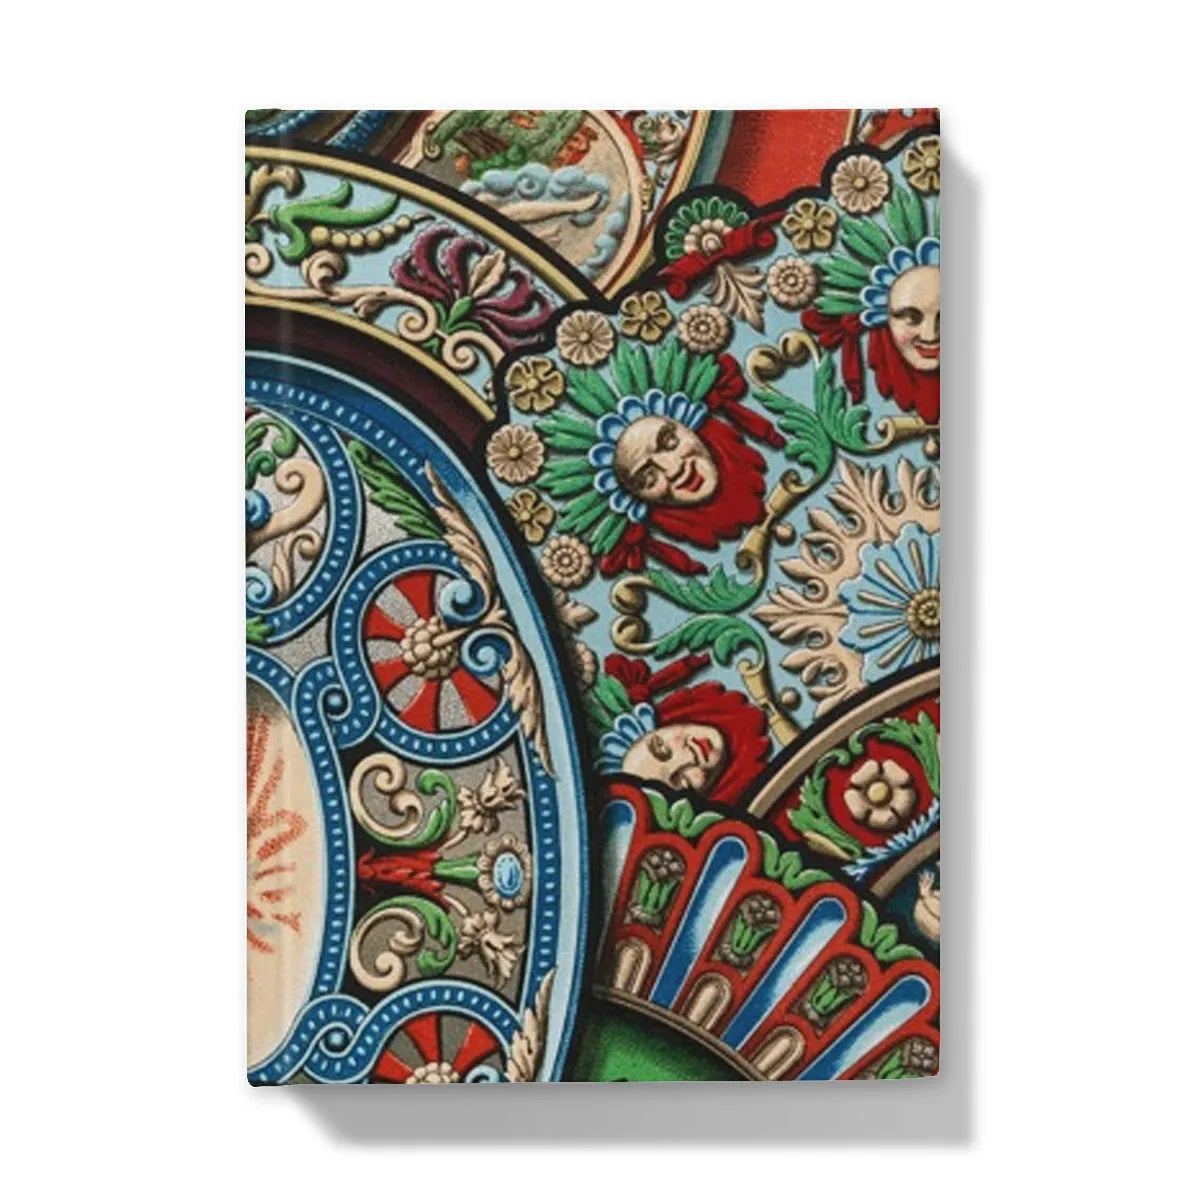 Renaissance Pattern By Auguste Racinet Hardback Journal - 5’x7’ / Lined - Notebooks & Notepads - Aesthetic Art